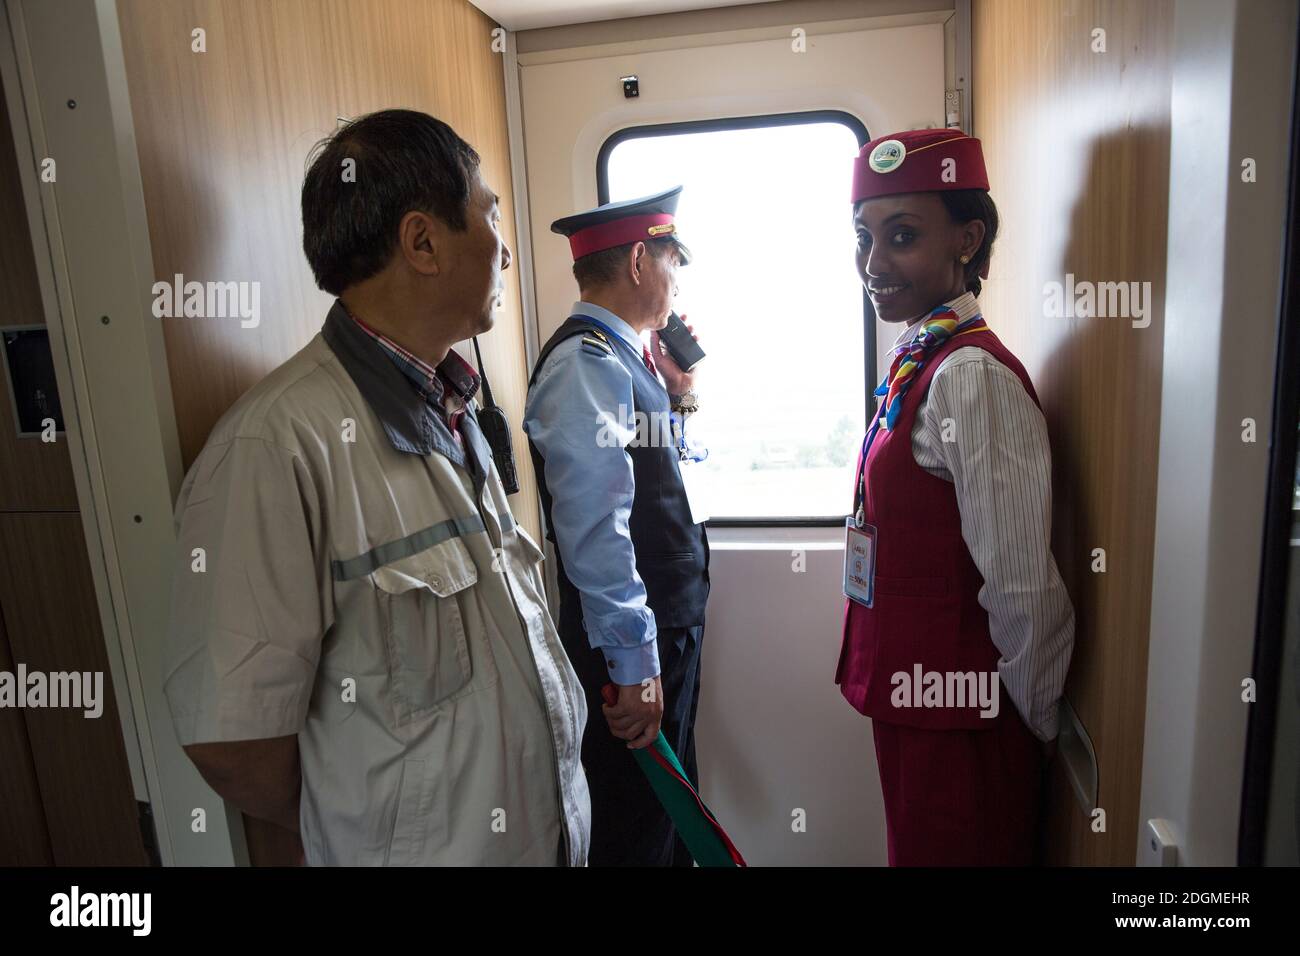 --FILE--An African railway attendant wearing standard uniform of China's high-speed railway attendants serves passengers on a train at a railway stati Stock Photo